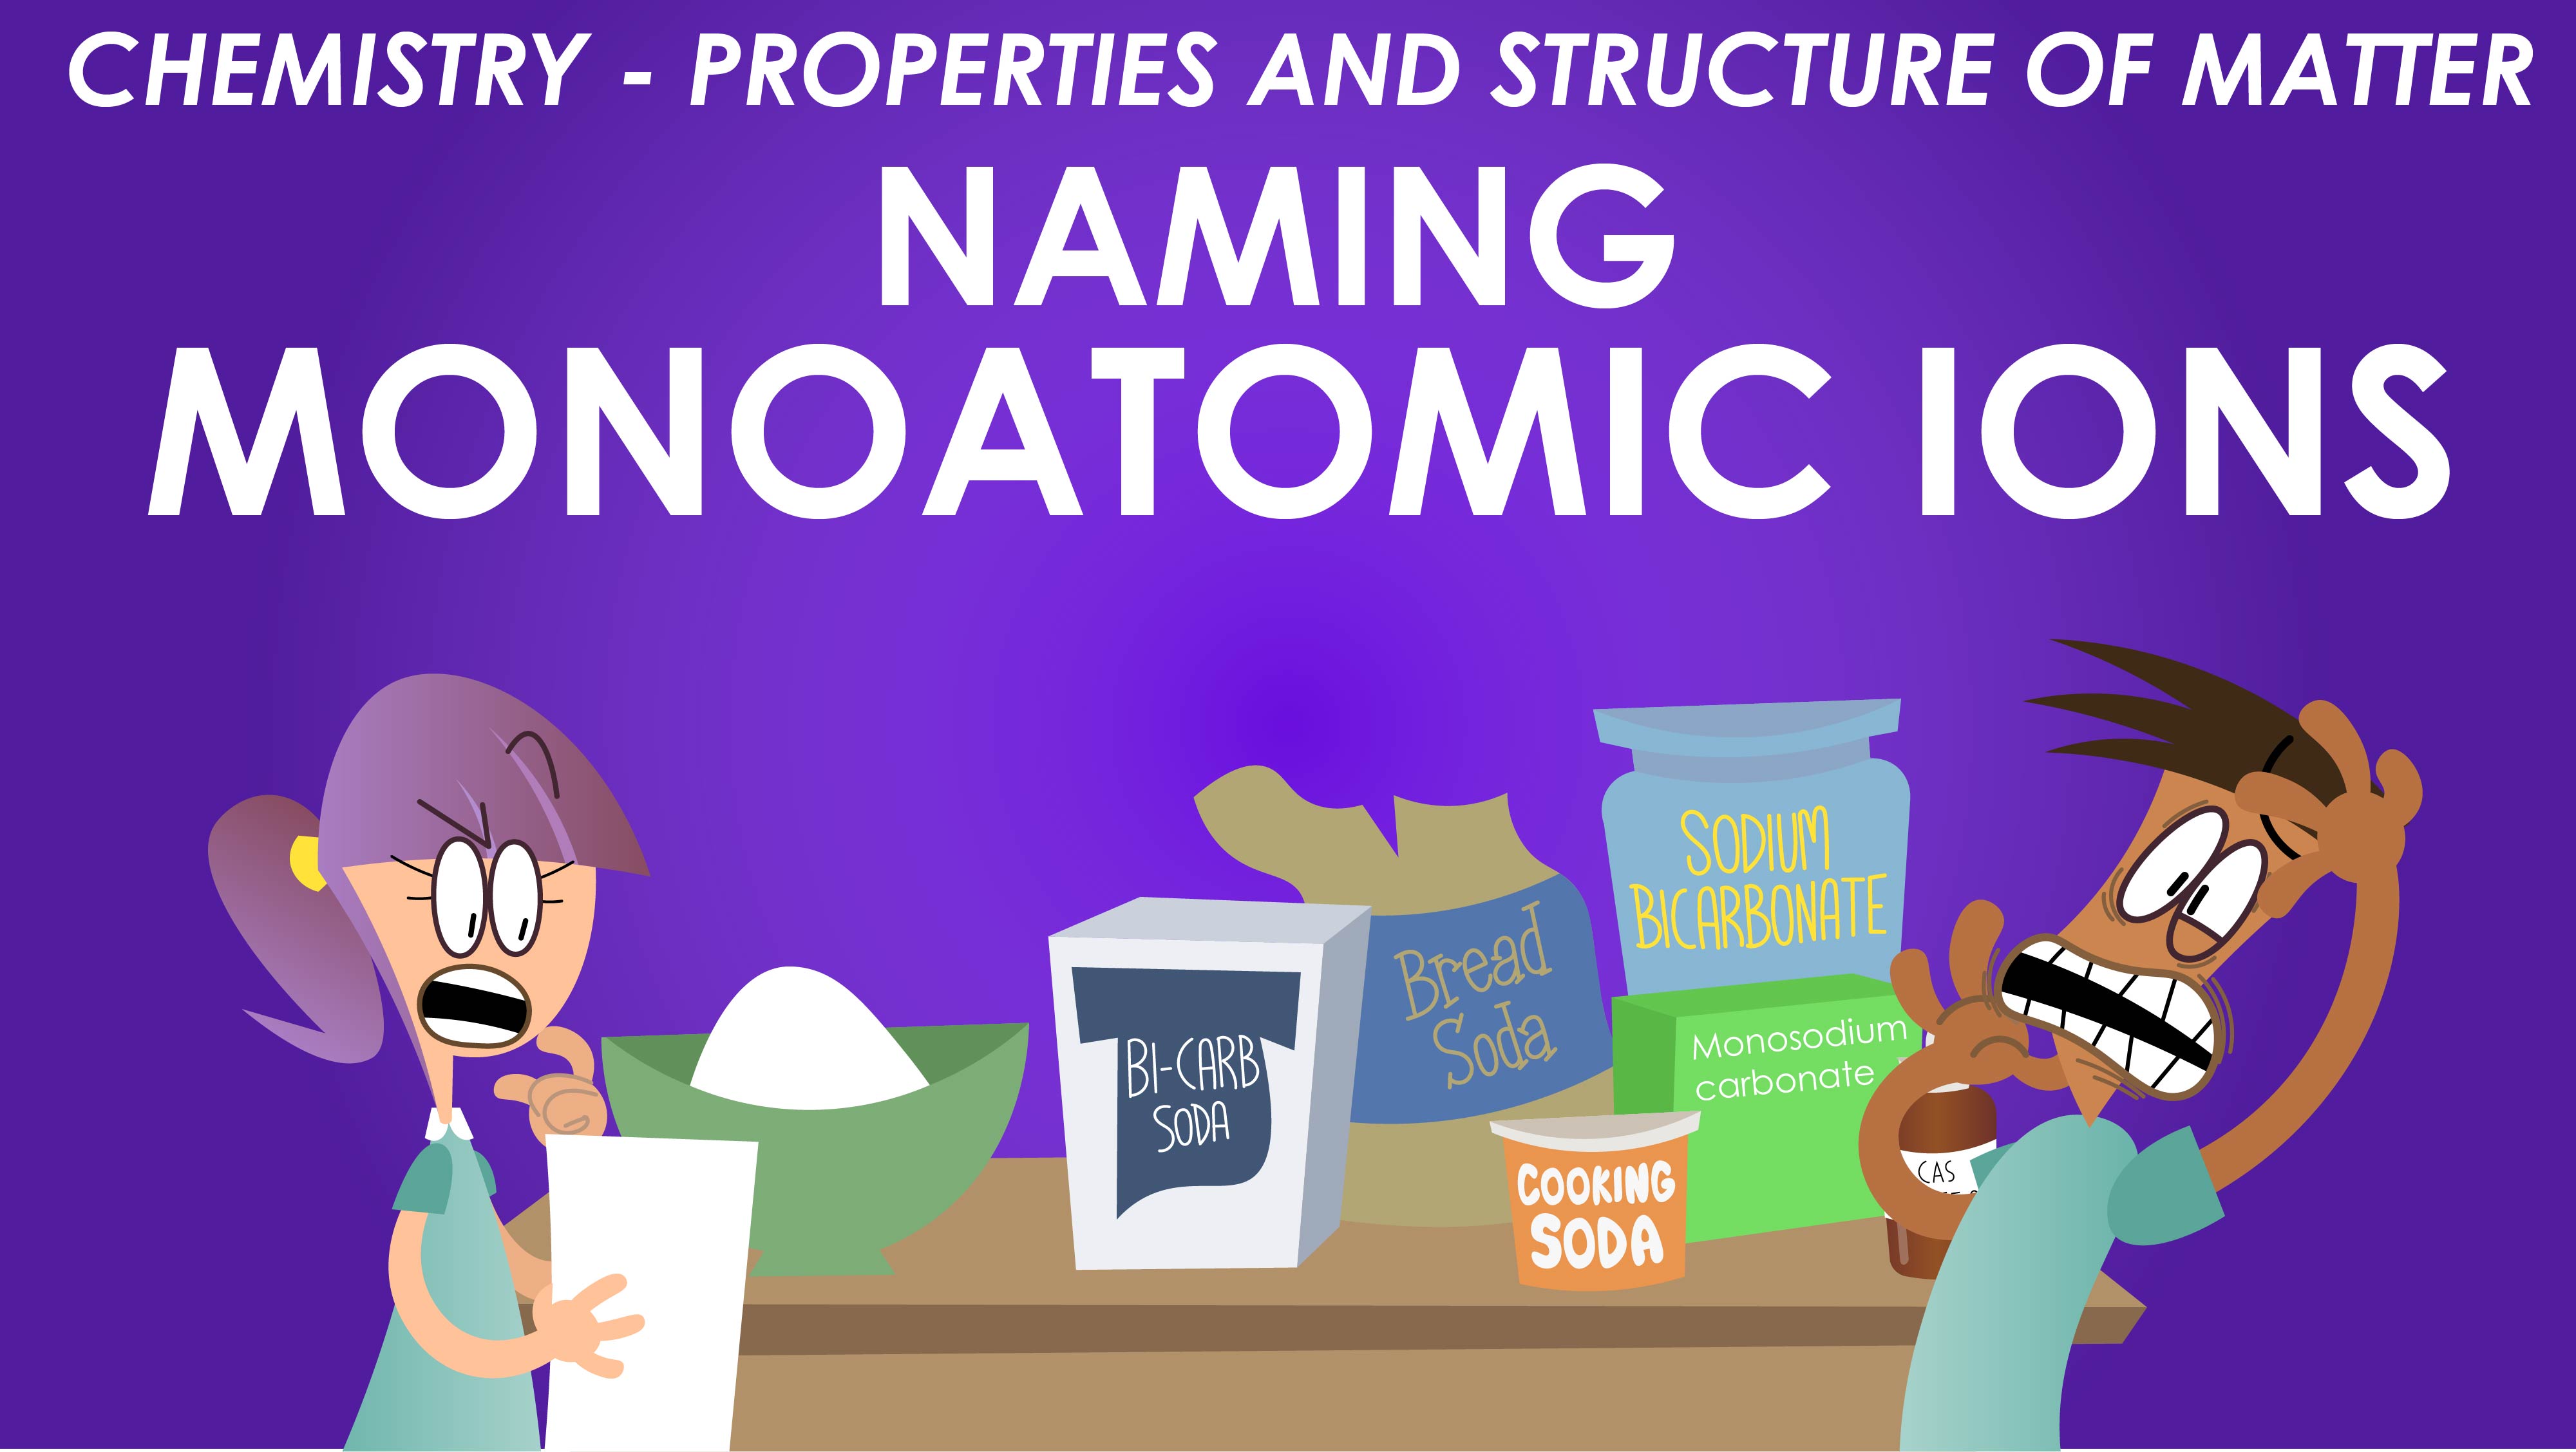 Naming Monoatomic Ions - Properties of Matter